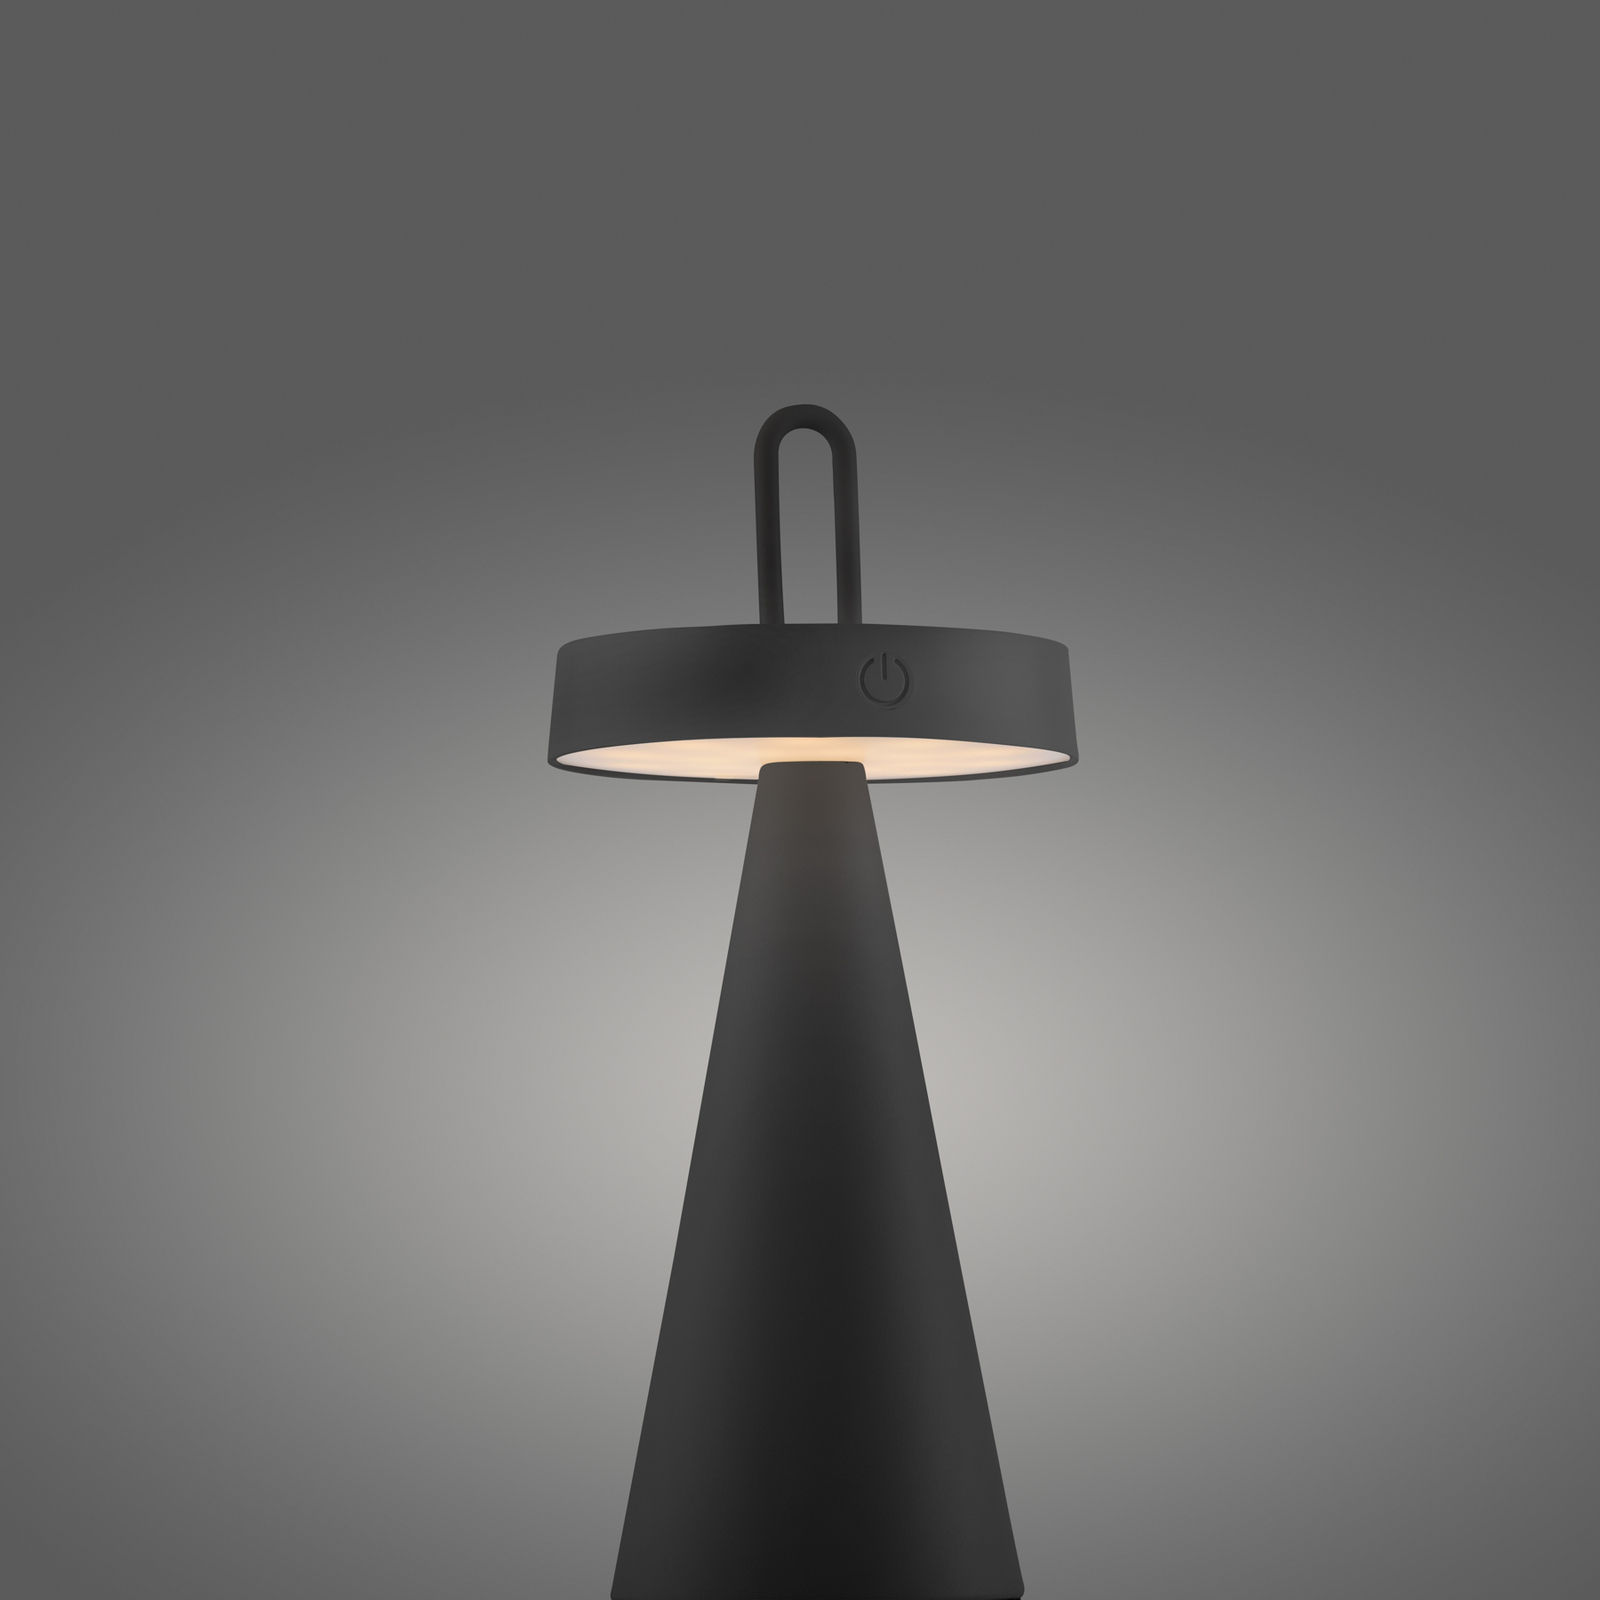 JUST LIGHT. Lampada da tavolo LED Alwa ricaricabile, nero, ferro, IP44